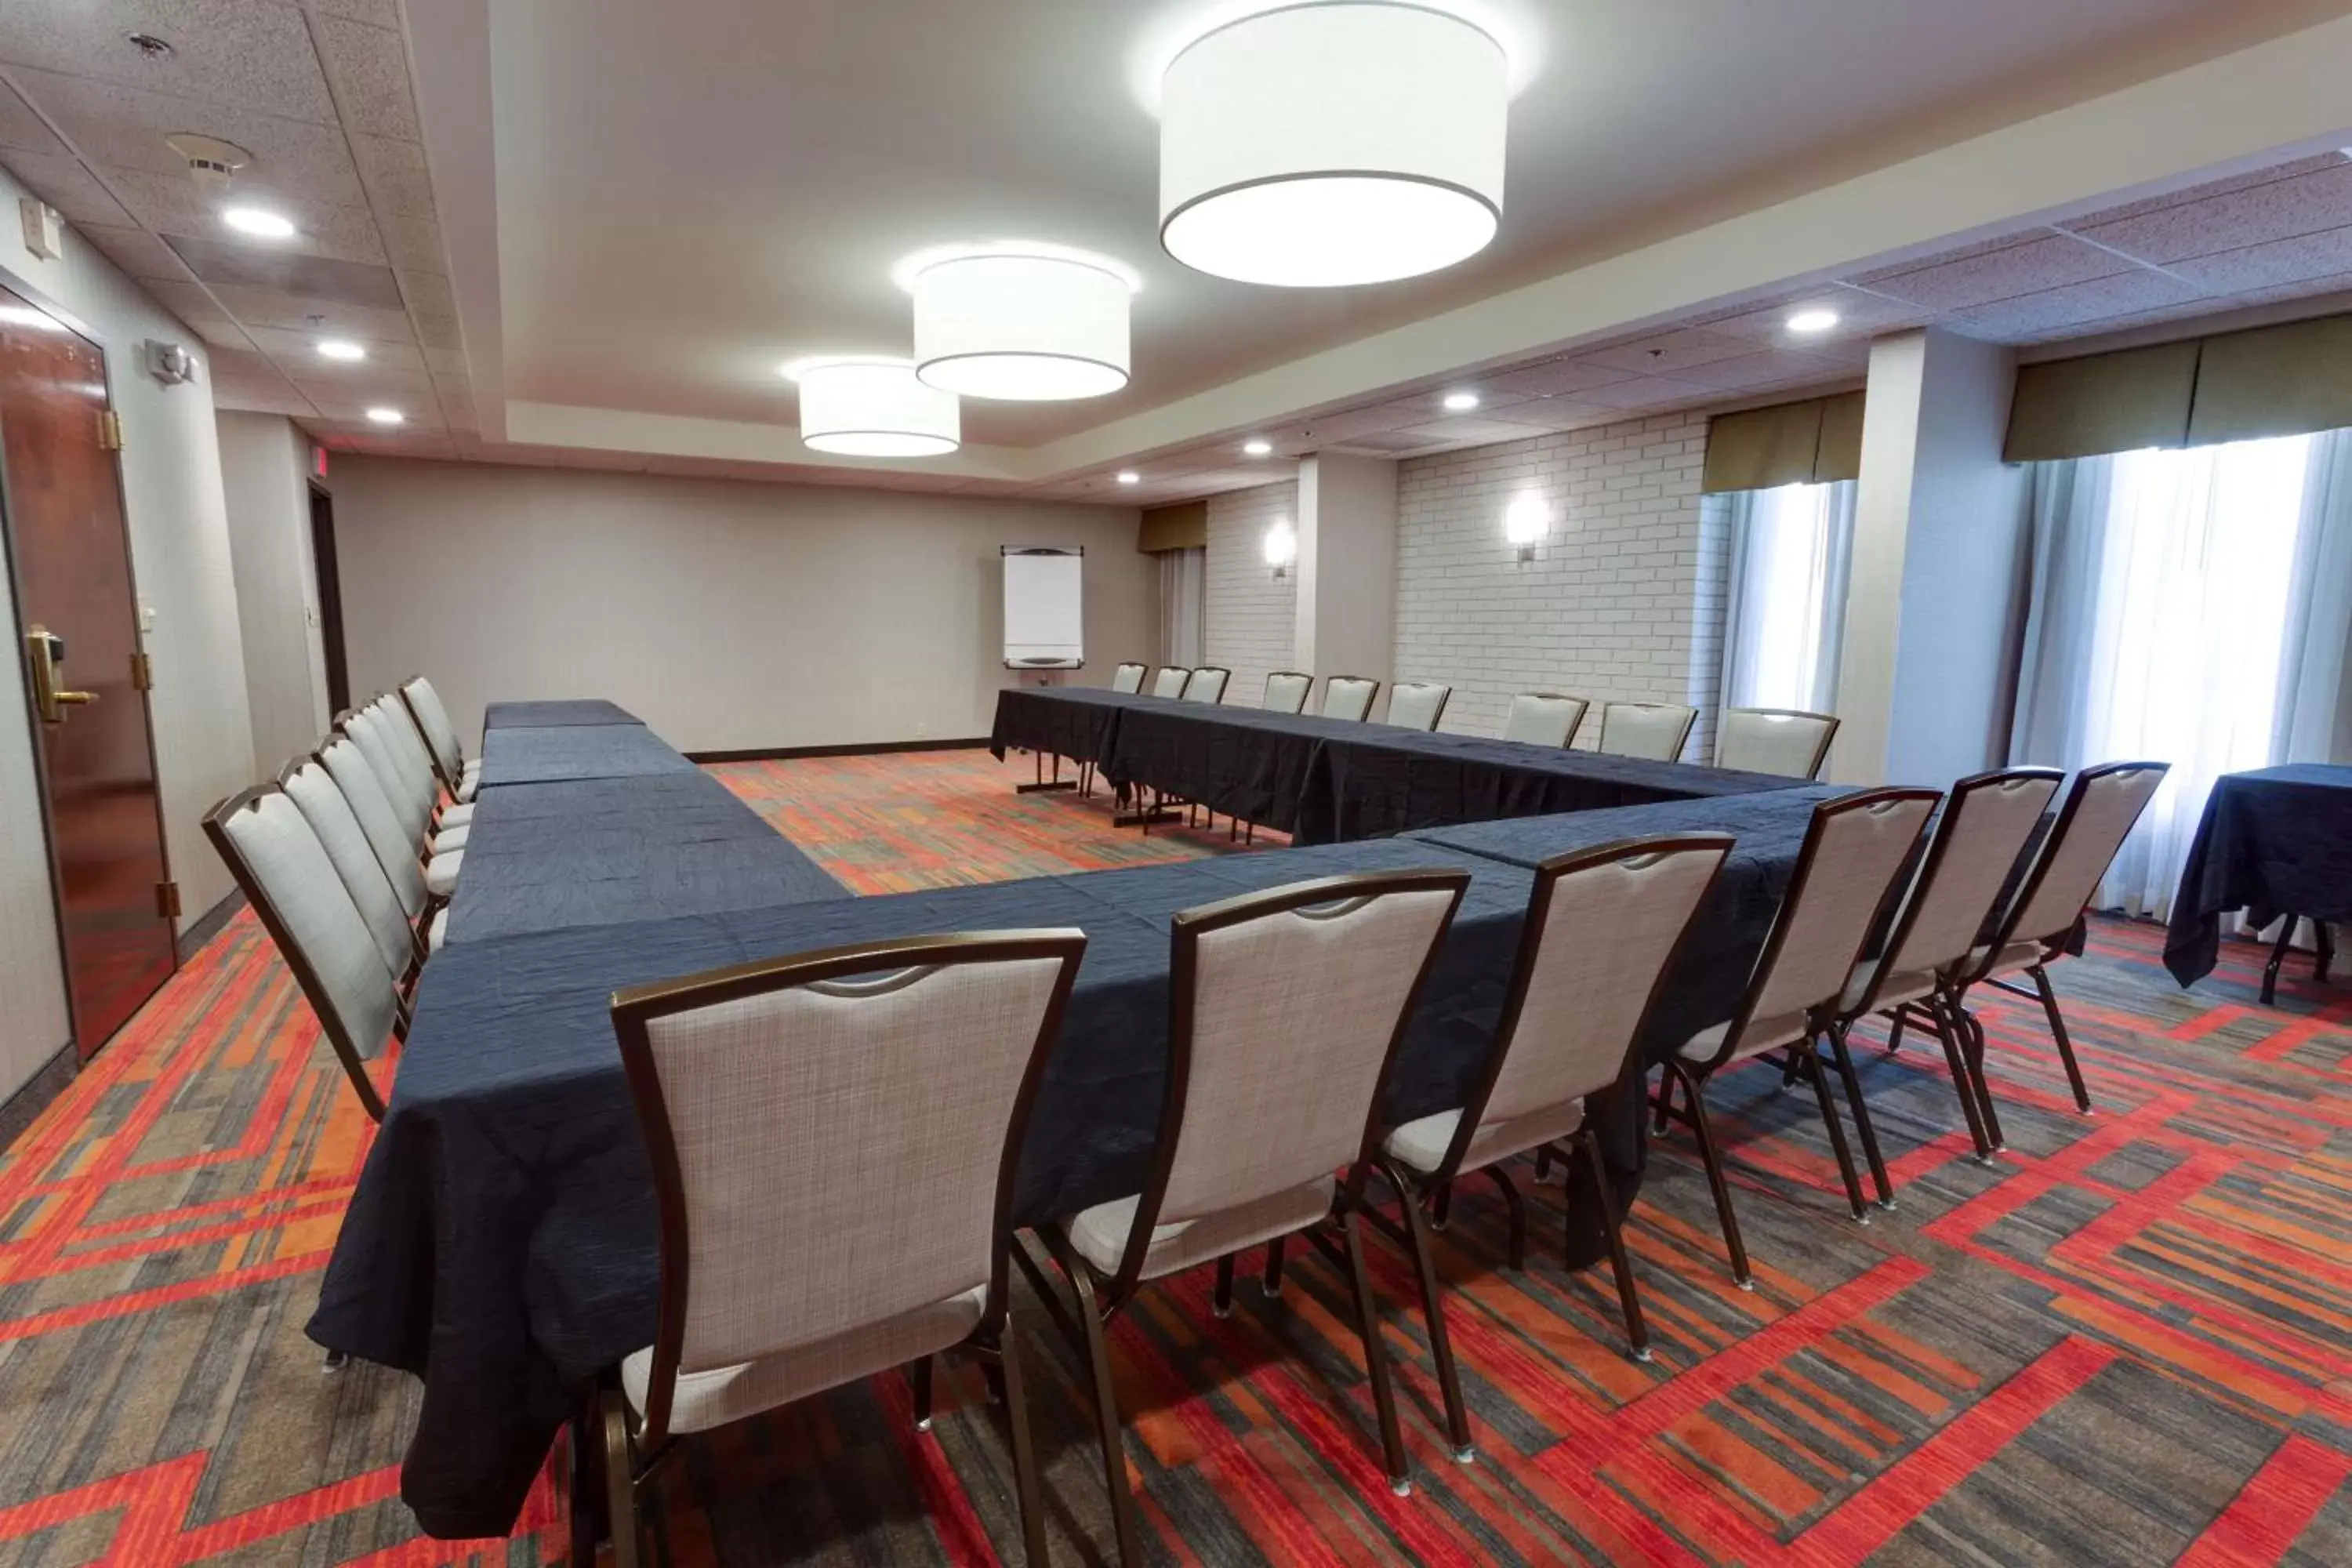 Meeting/conference room in Drury Inn & Suites Denver Tech Center